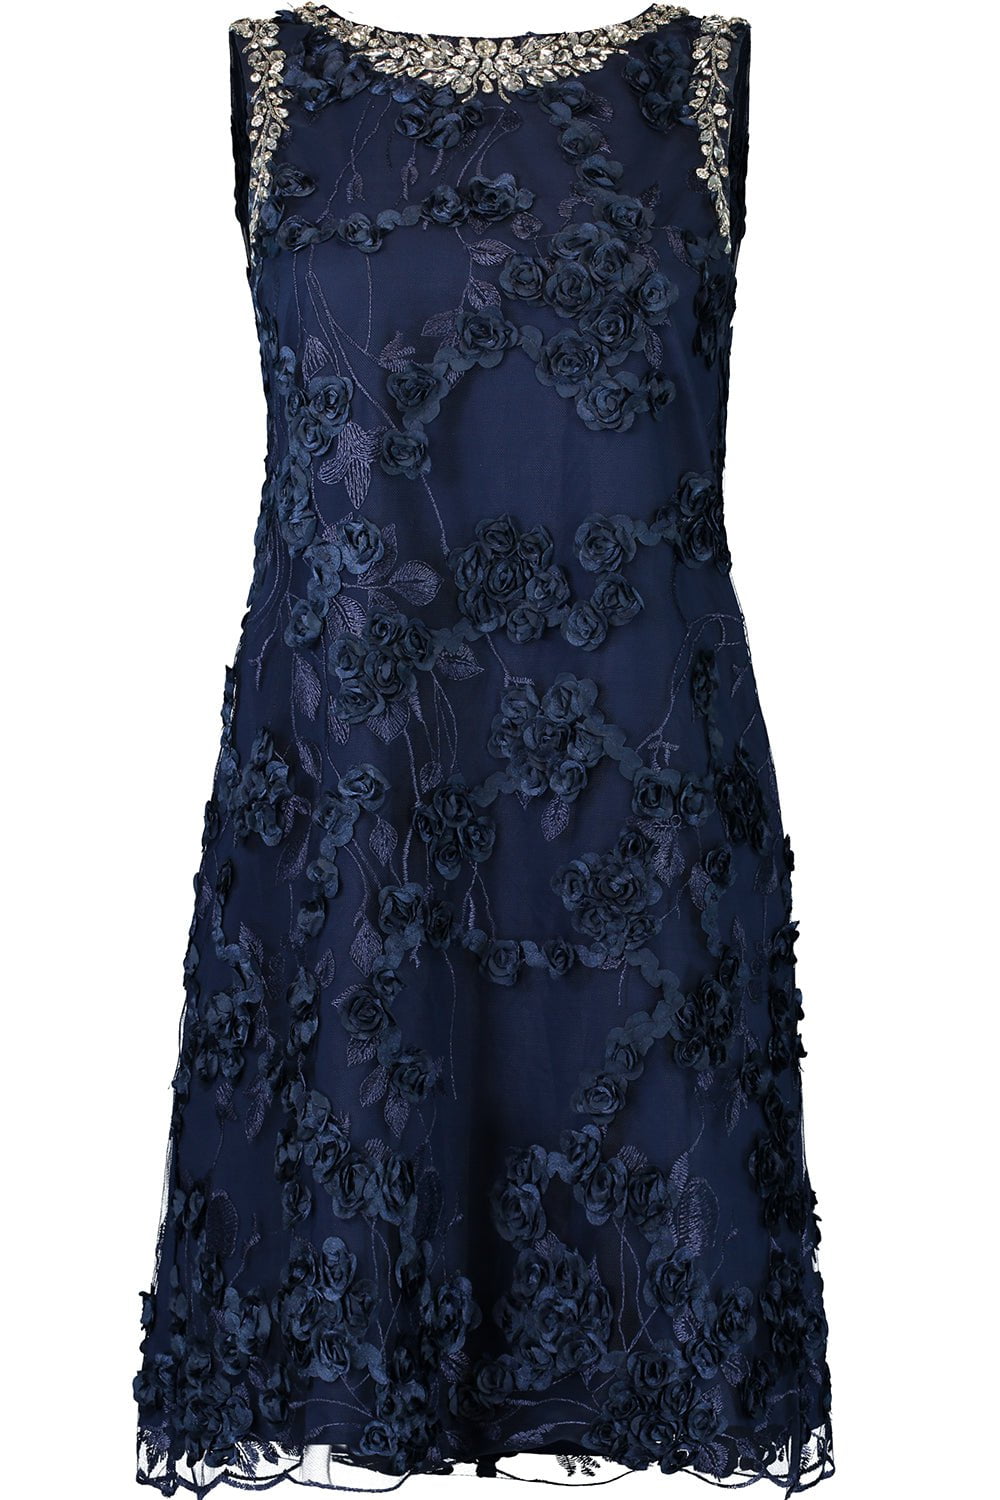 BADGLEY MISCHKA-Embellished Neckline Dress-